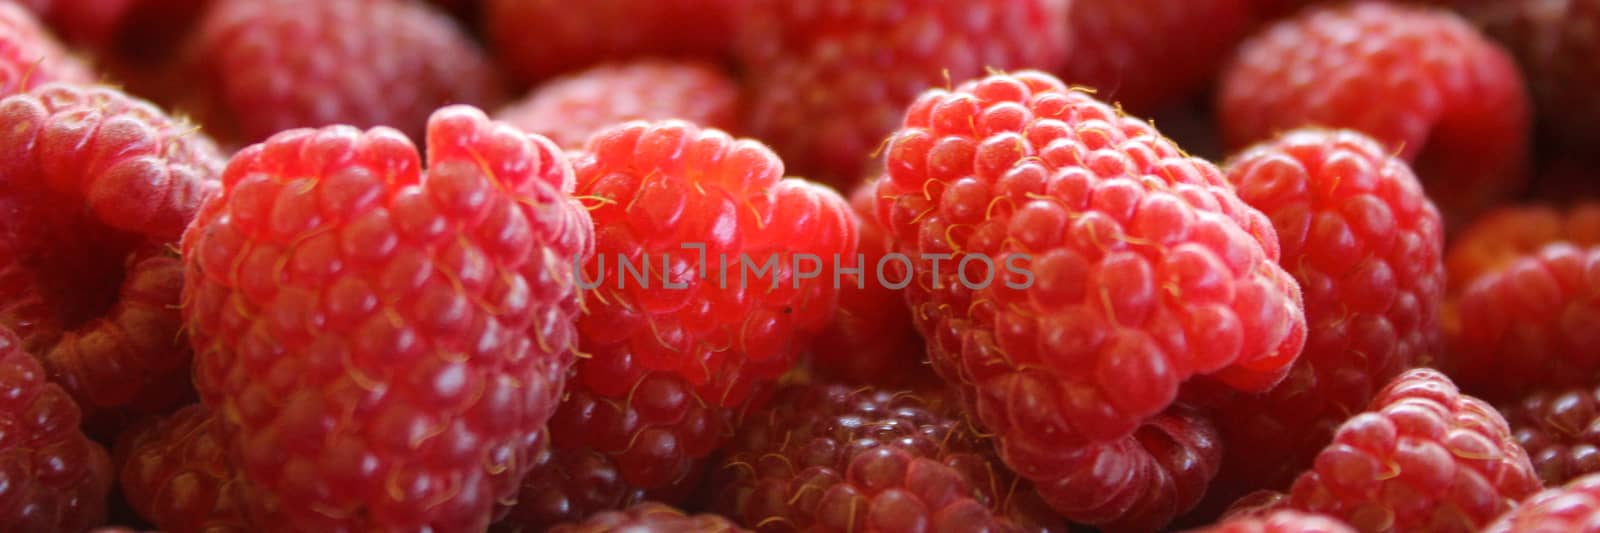 Banner of raspberries. Close up of raspberries. by mahirrov